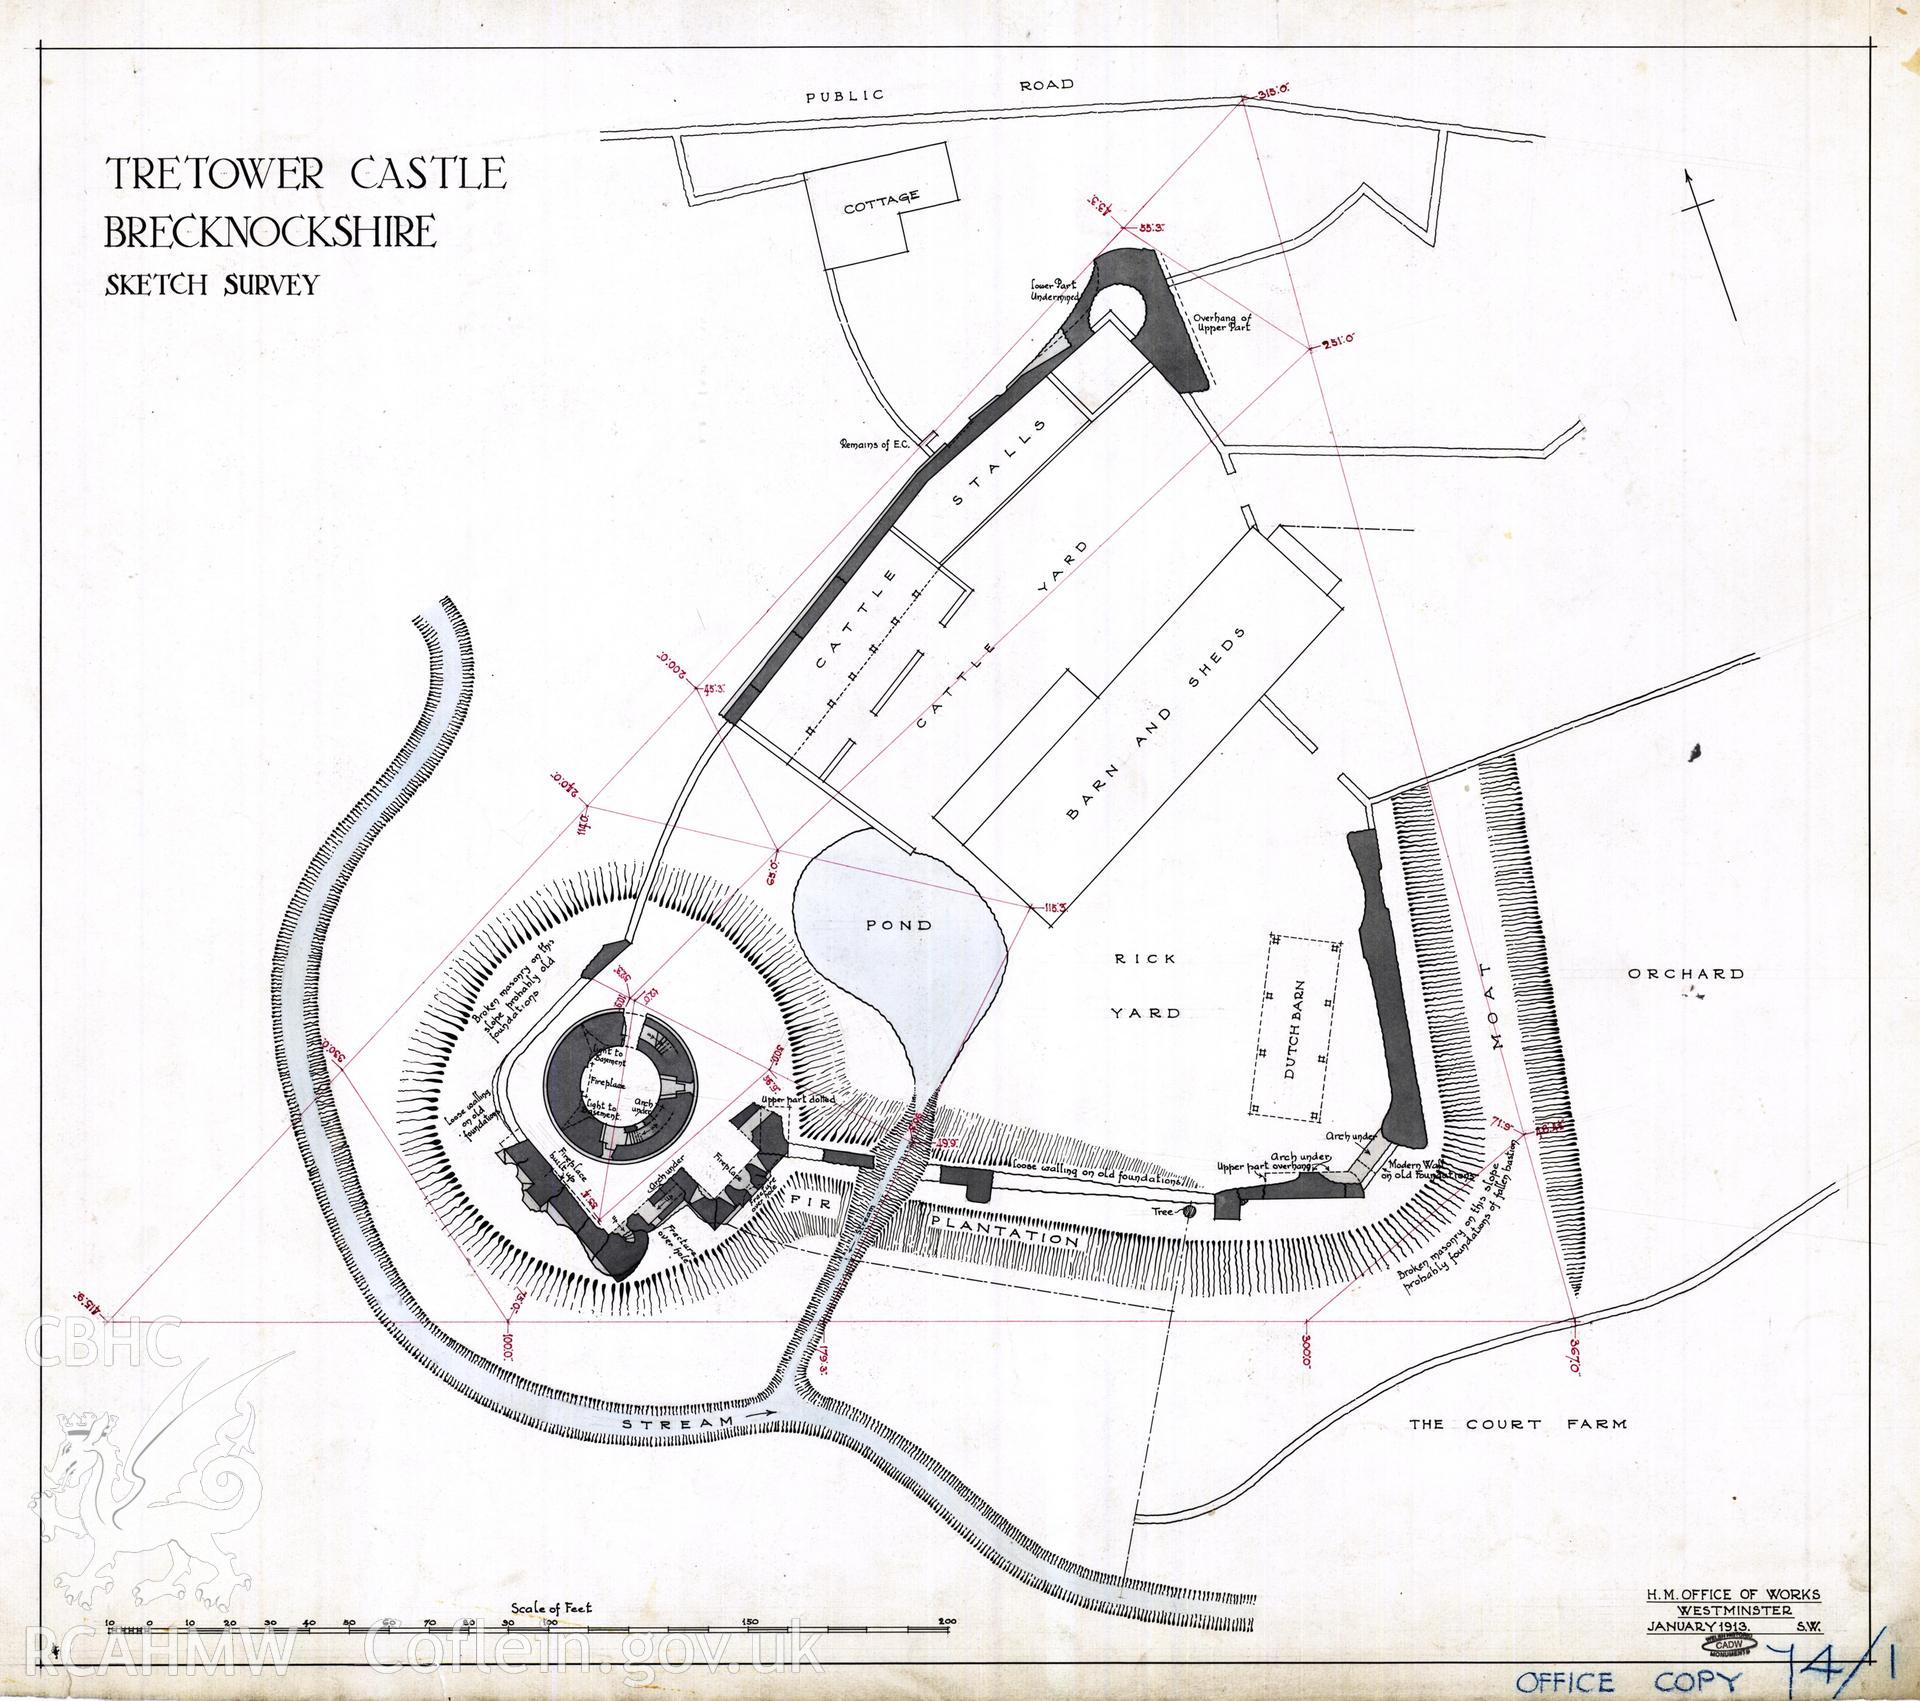 Cadw guardianship monument drawing of Tretower Castle. Sketch survey. Cadw Ref. No:74/1. Scale 1:192.